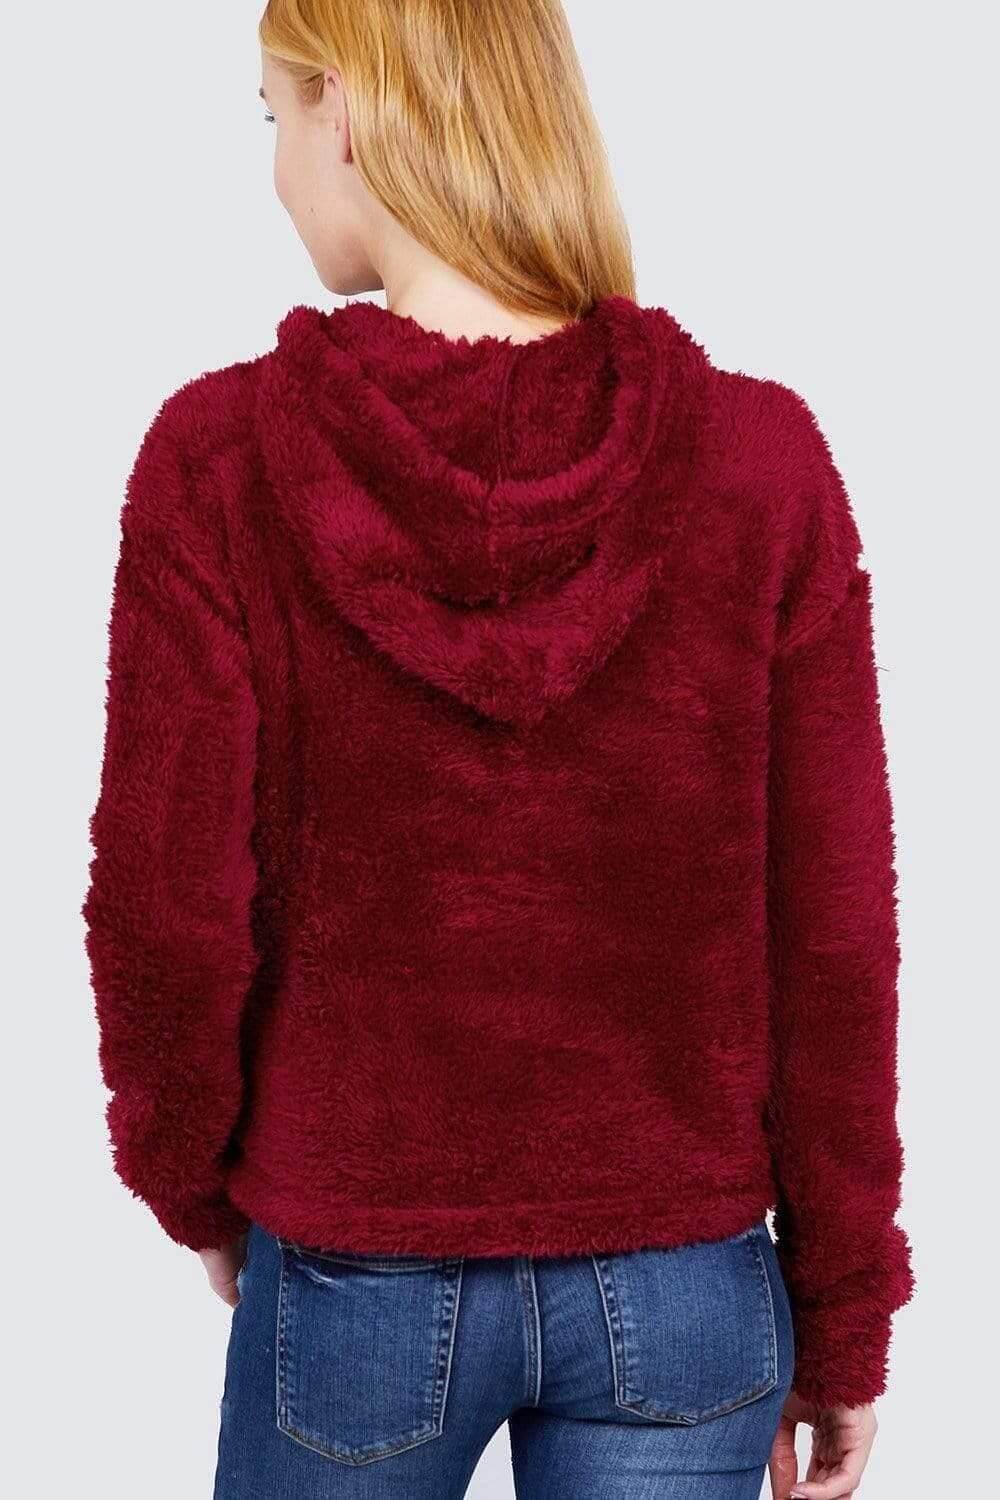 Burgundy Long Sleeve Faux Fur Sweater